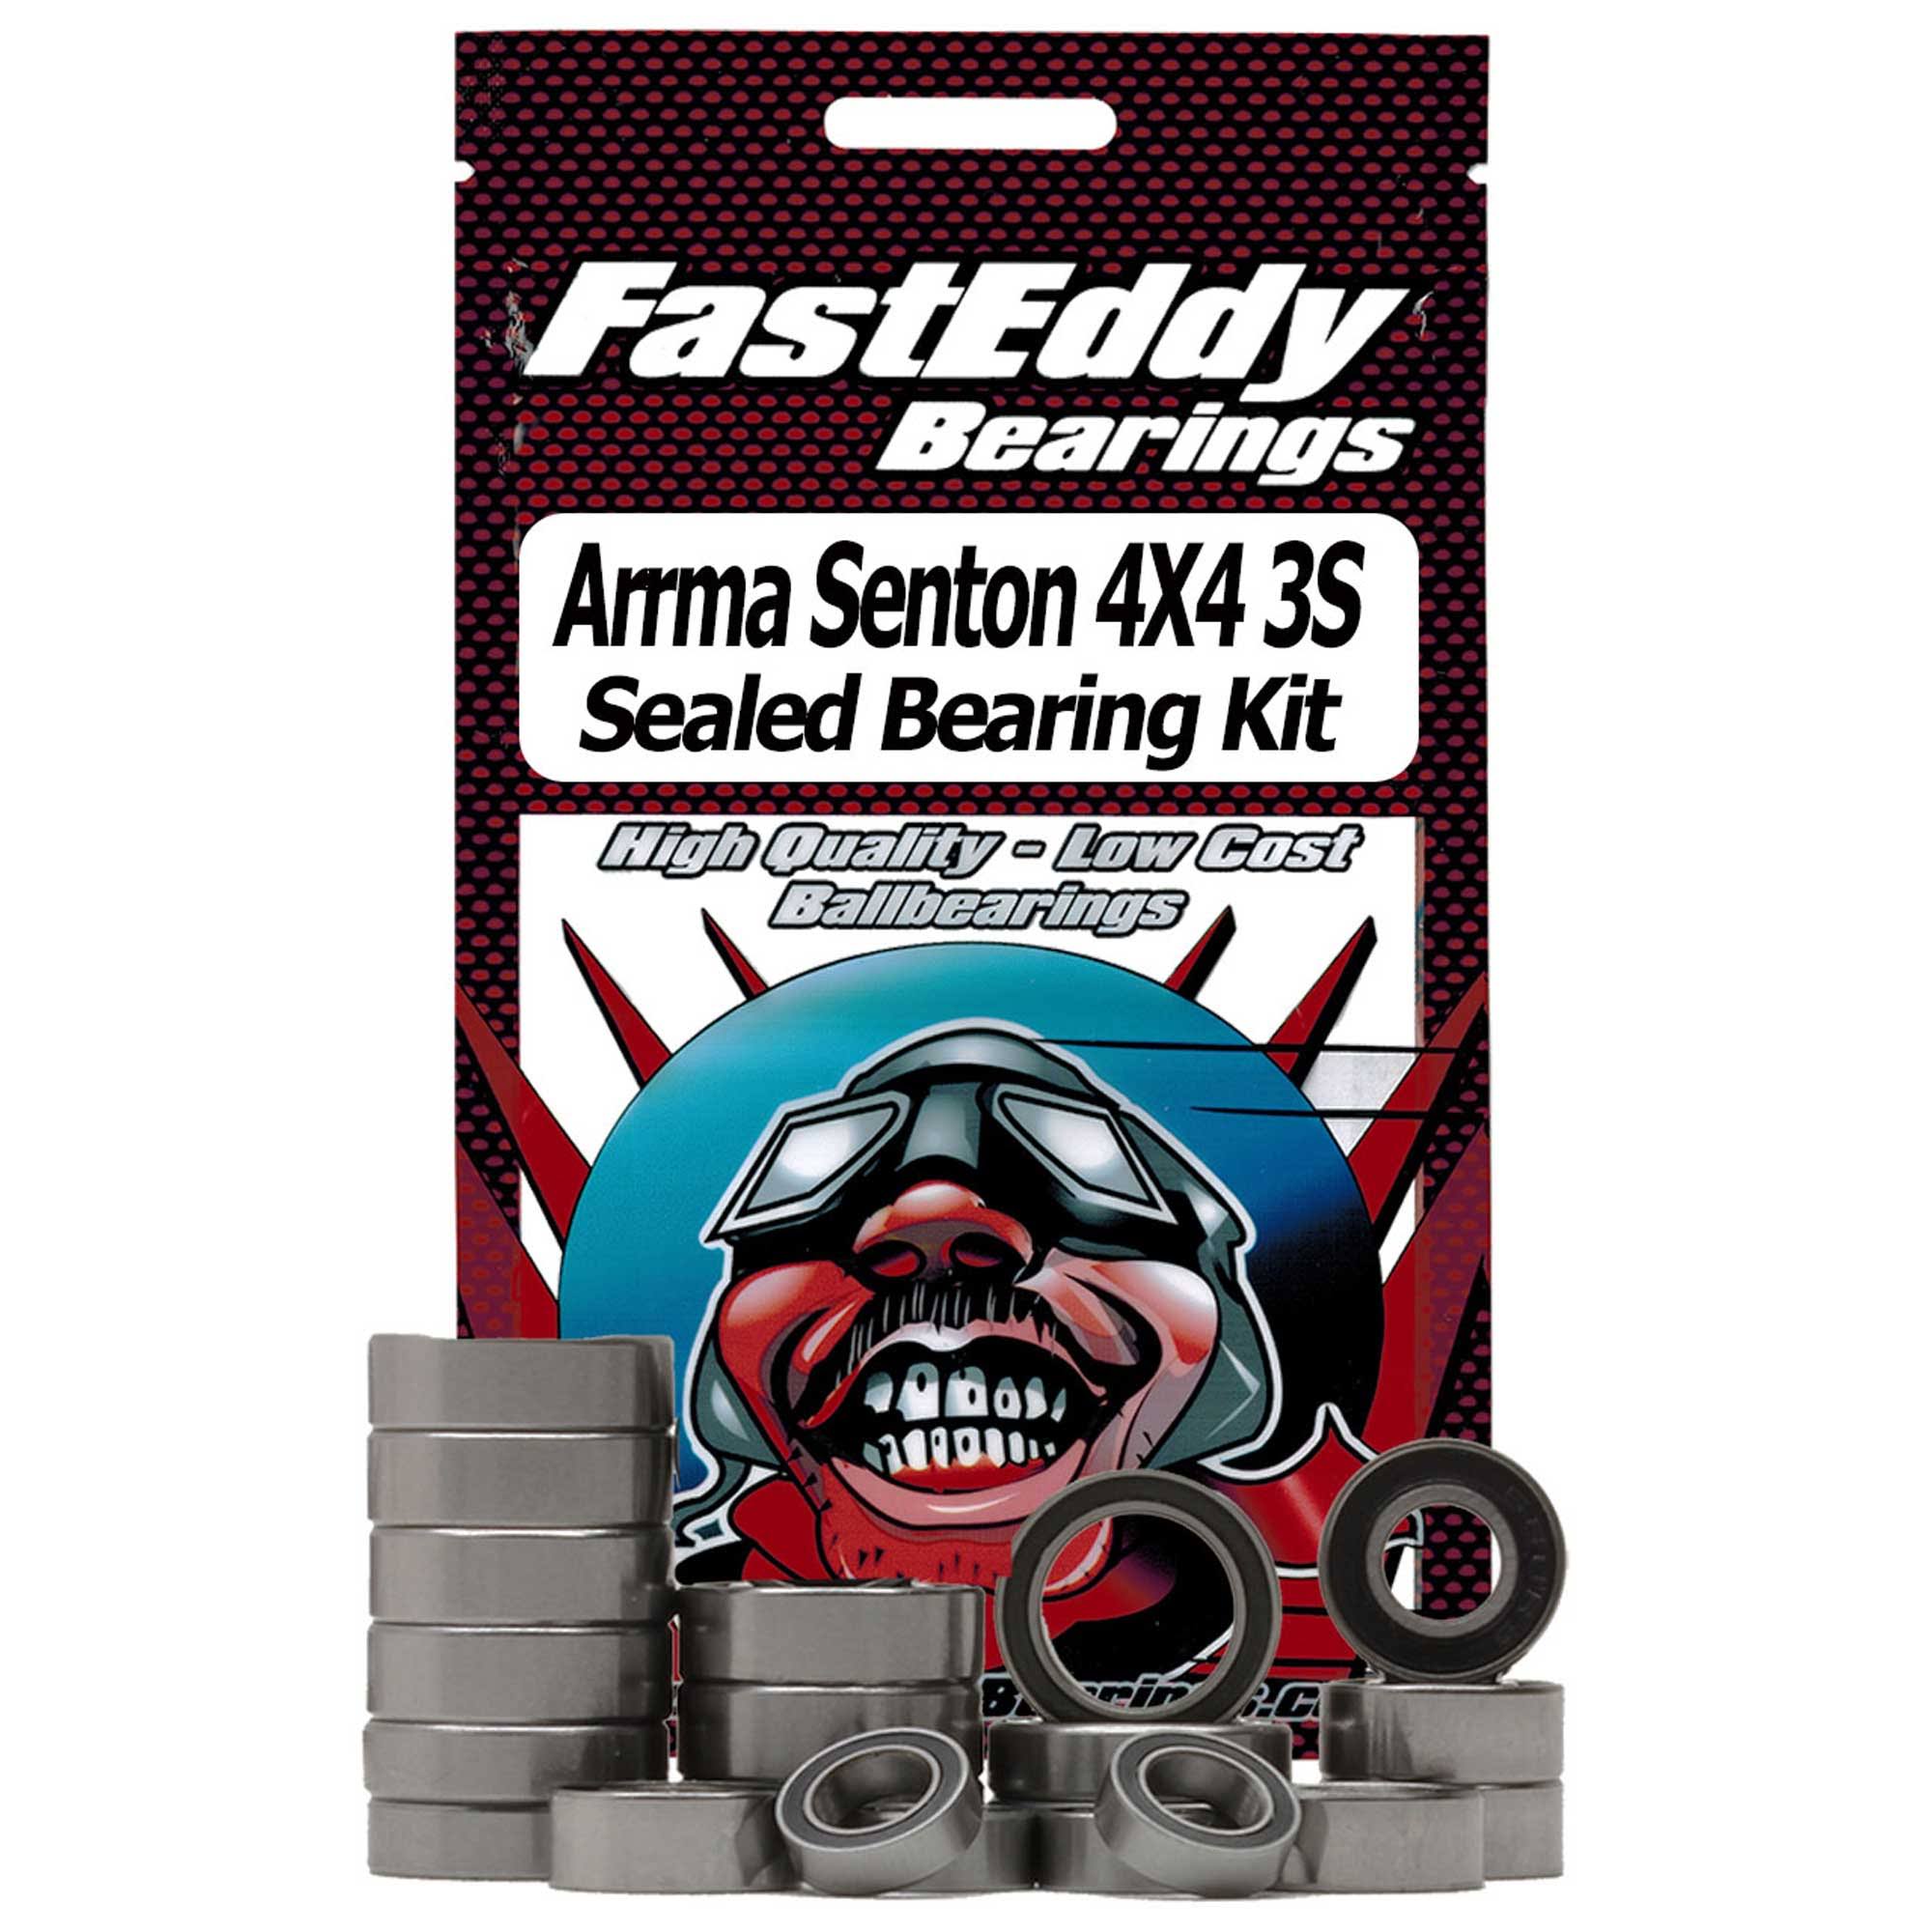 FastEddy Bearings for The Arrma Senton 4X4 3S Sealed Bearing Kit